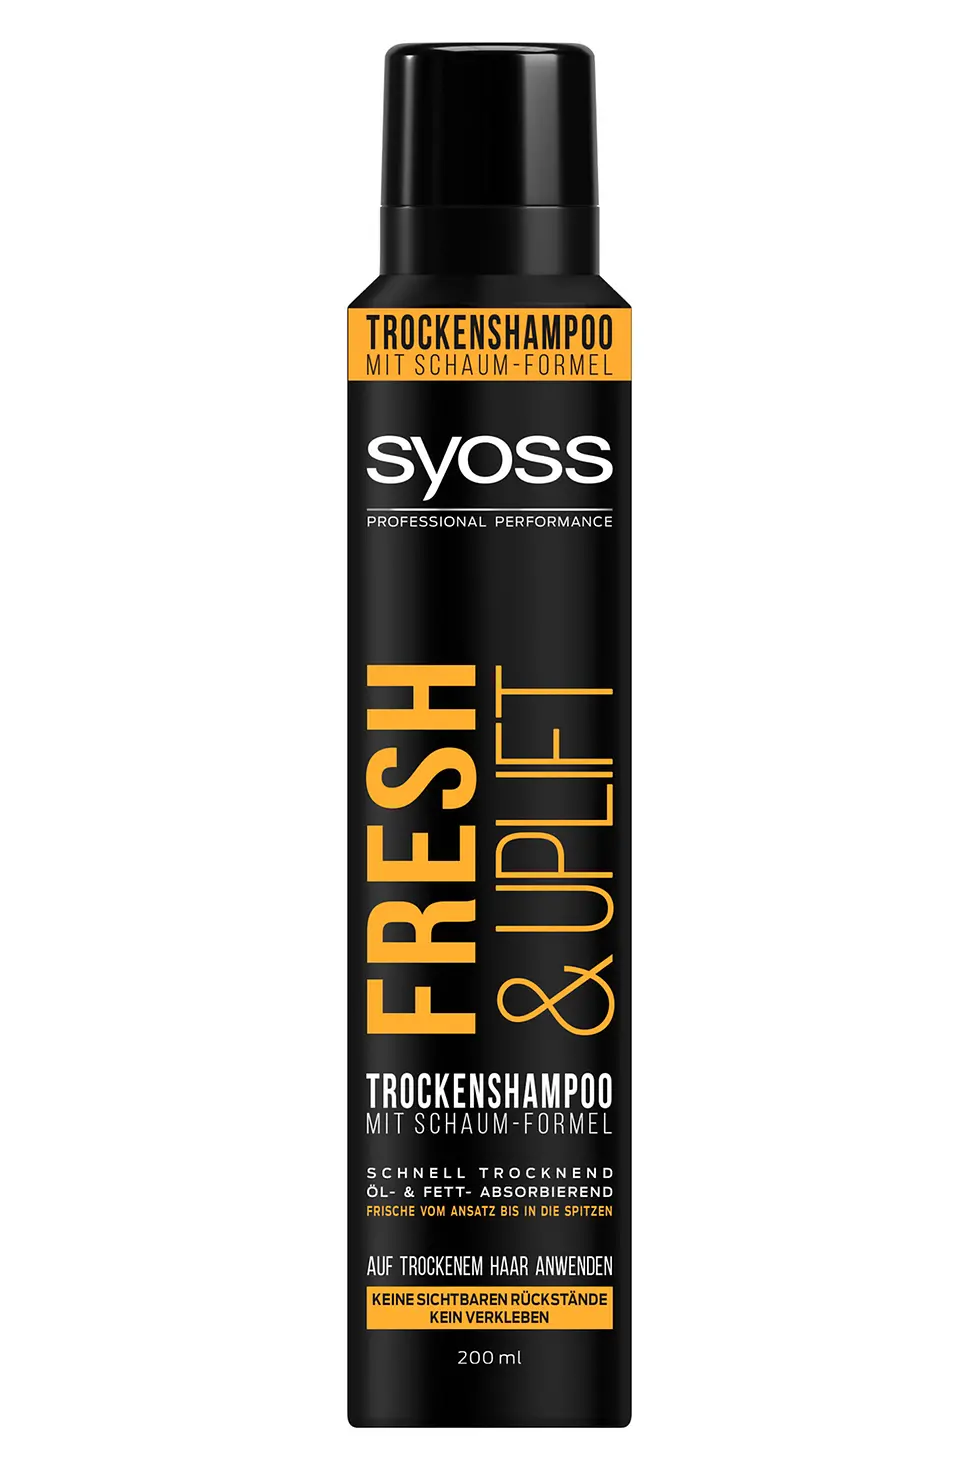 Syoss Fresh & Uplift Trockenshampoo mit Schaum-Formel